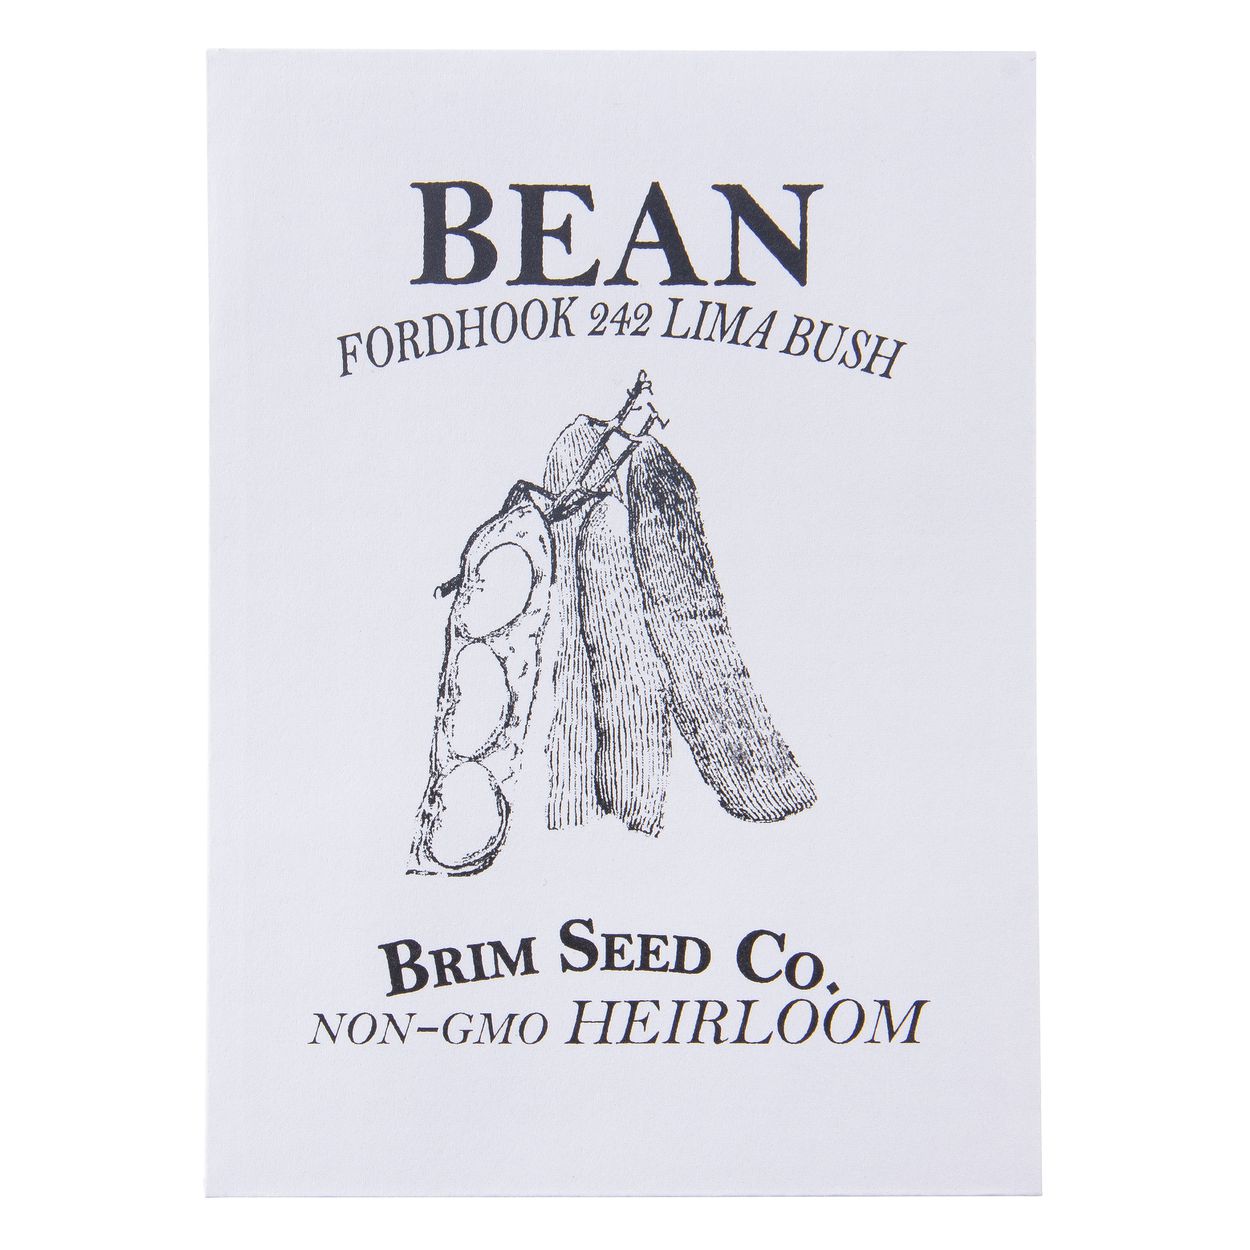 Brim Seed Co. - Fordhook 242 Lima Bush Bean Heirloom Seed